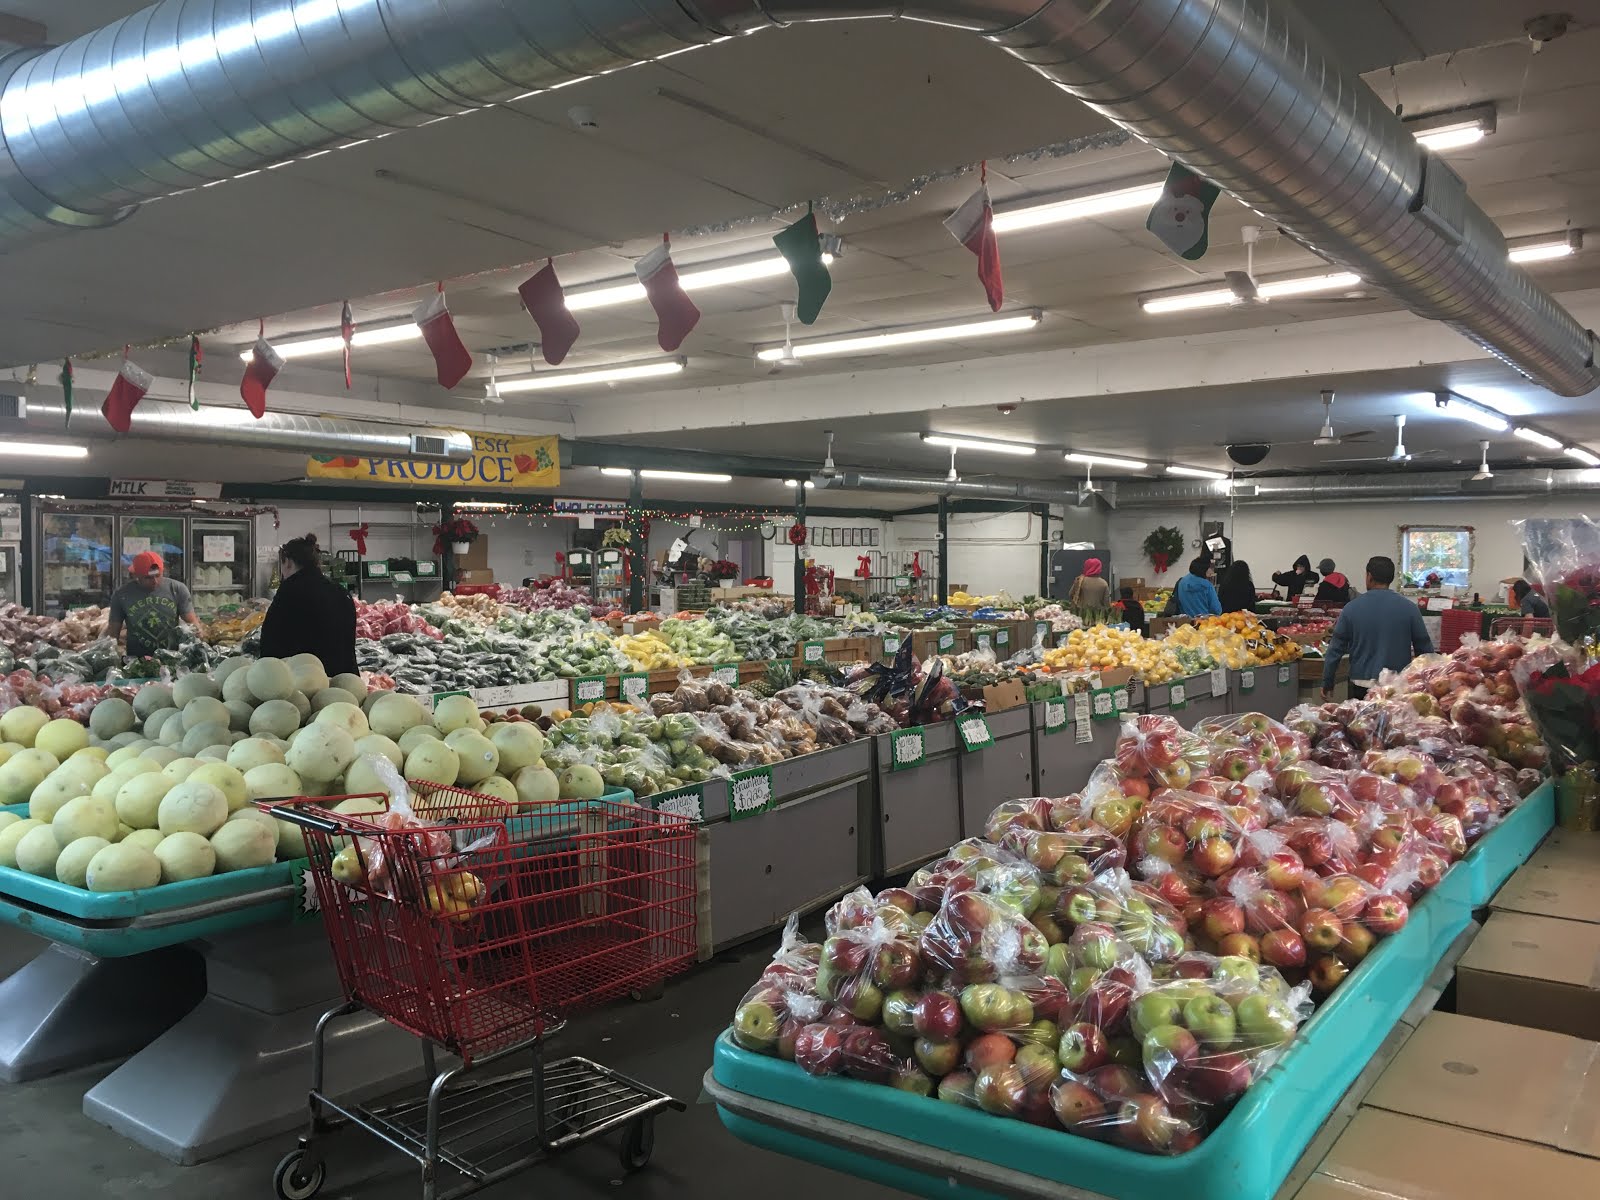 Verchios Produce Market